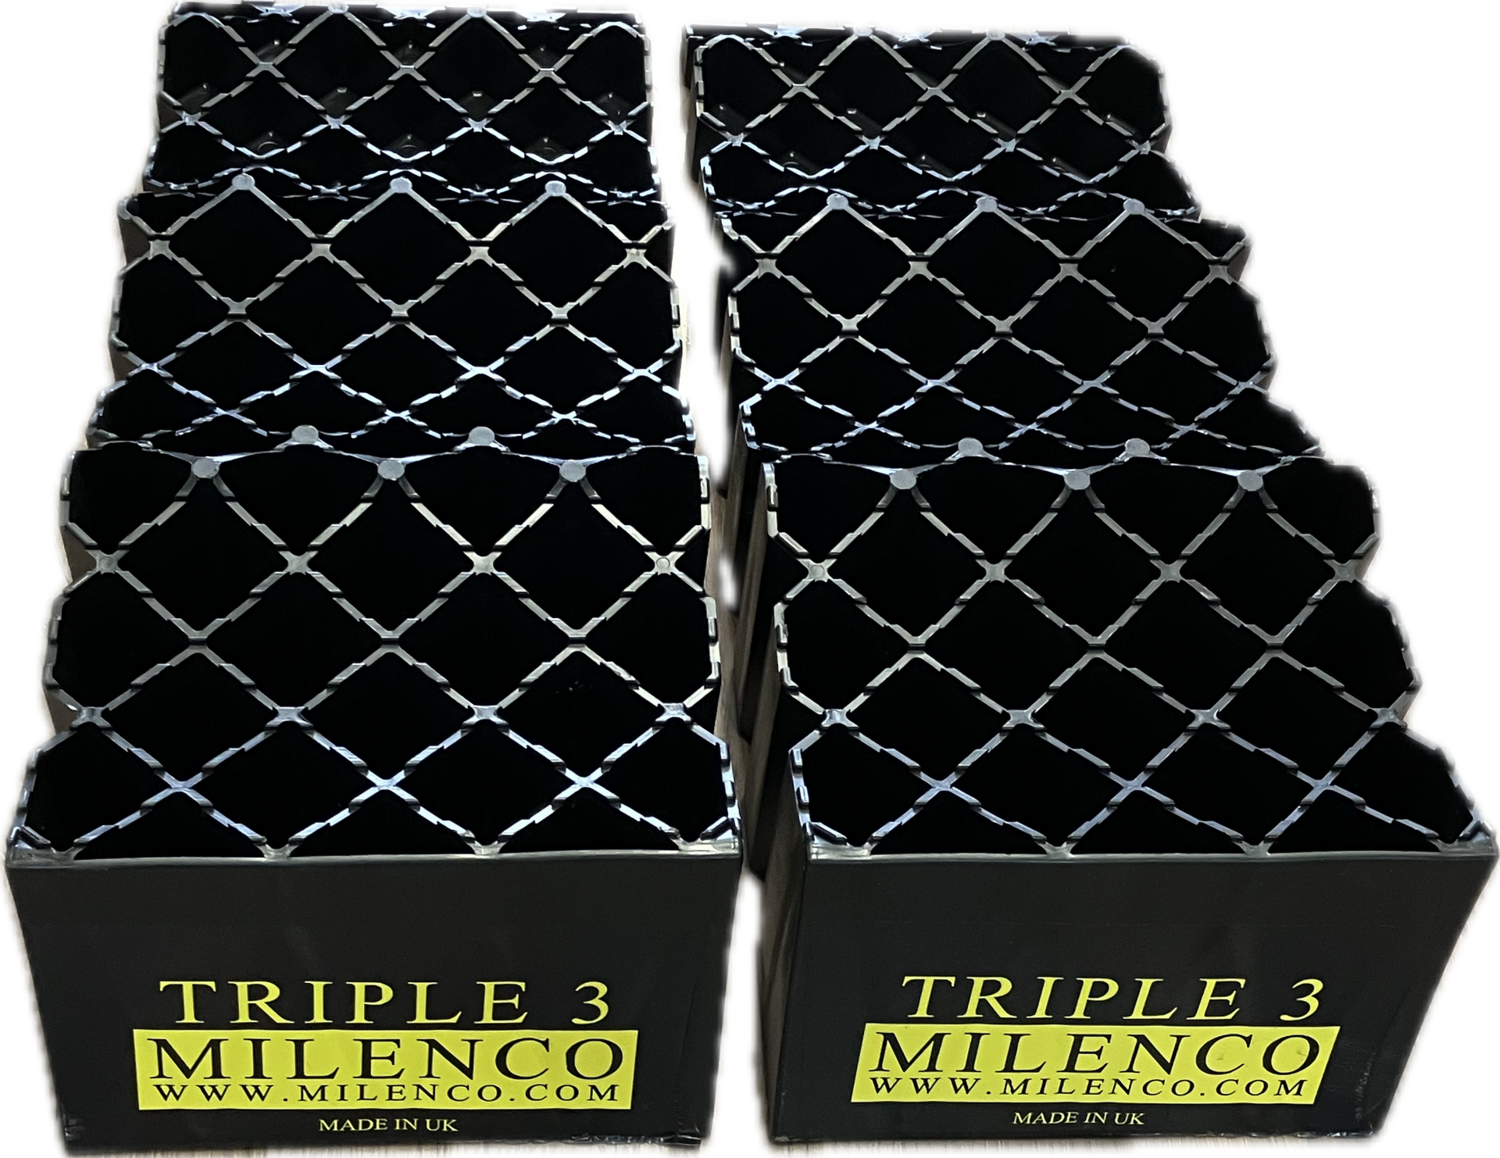 Milenco Triple 3 Leveller Levelling Ramps for Caravan Motorhome x2